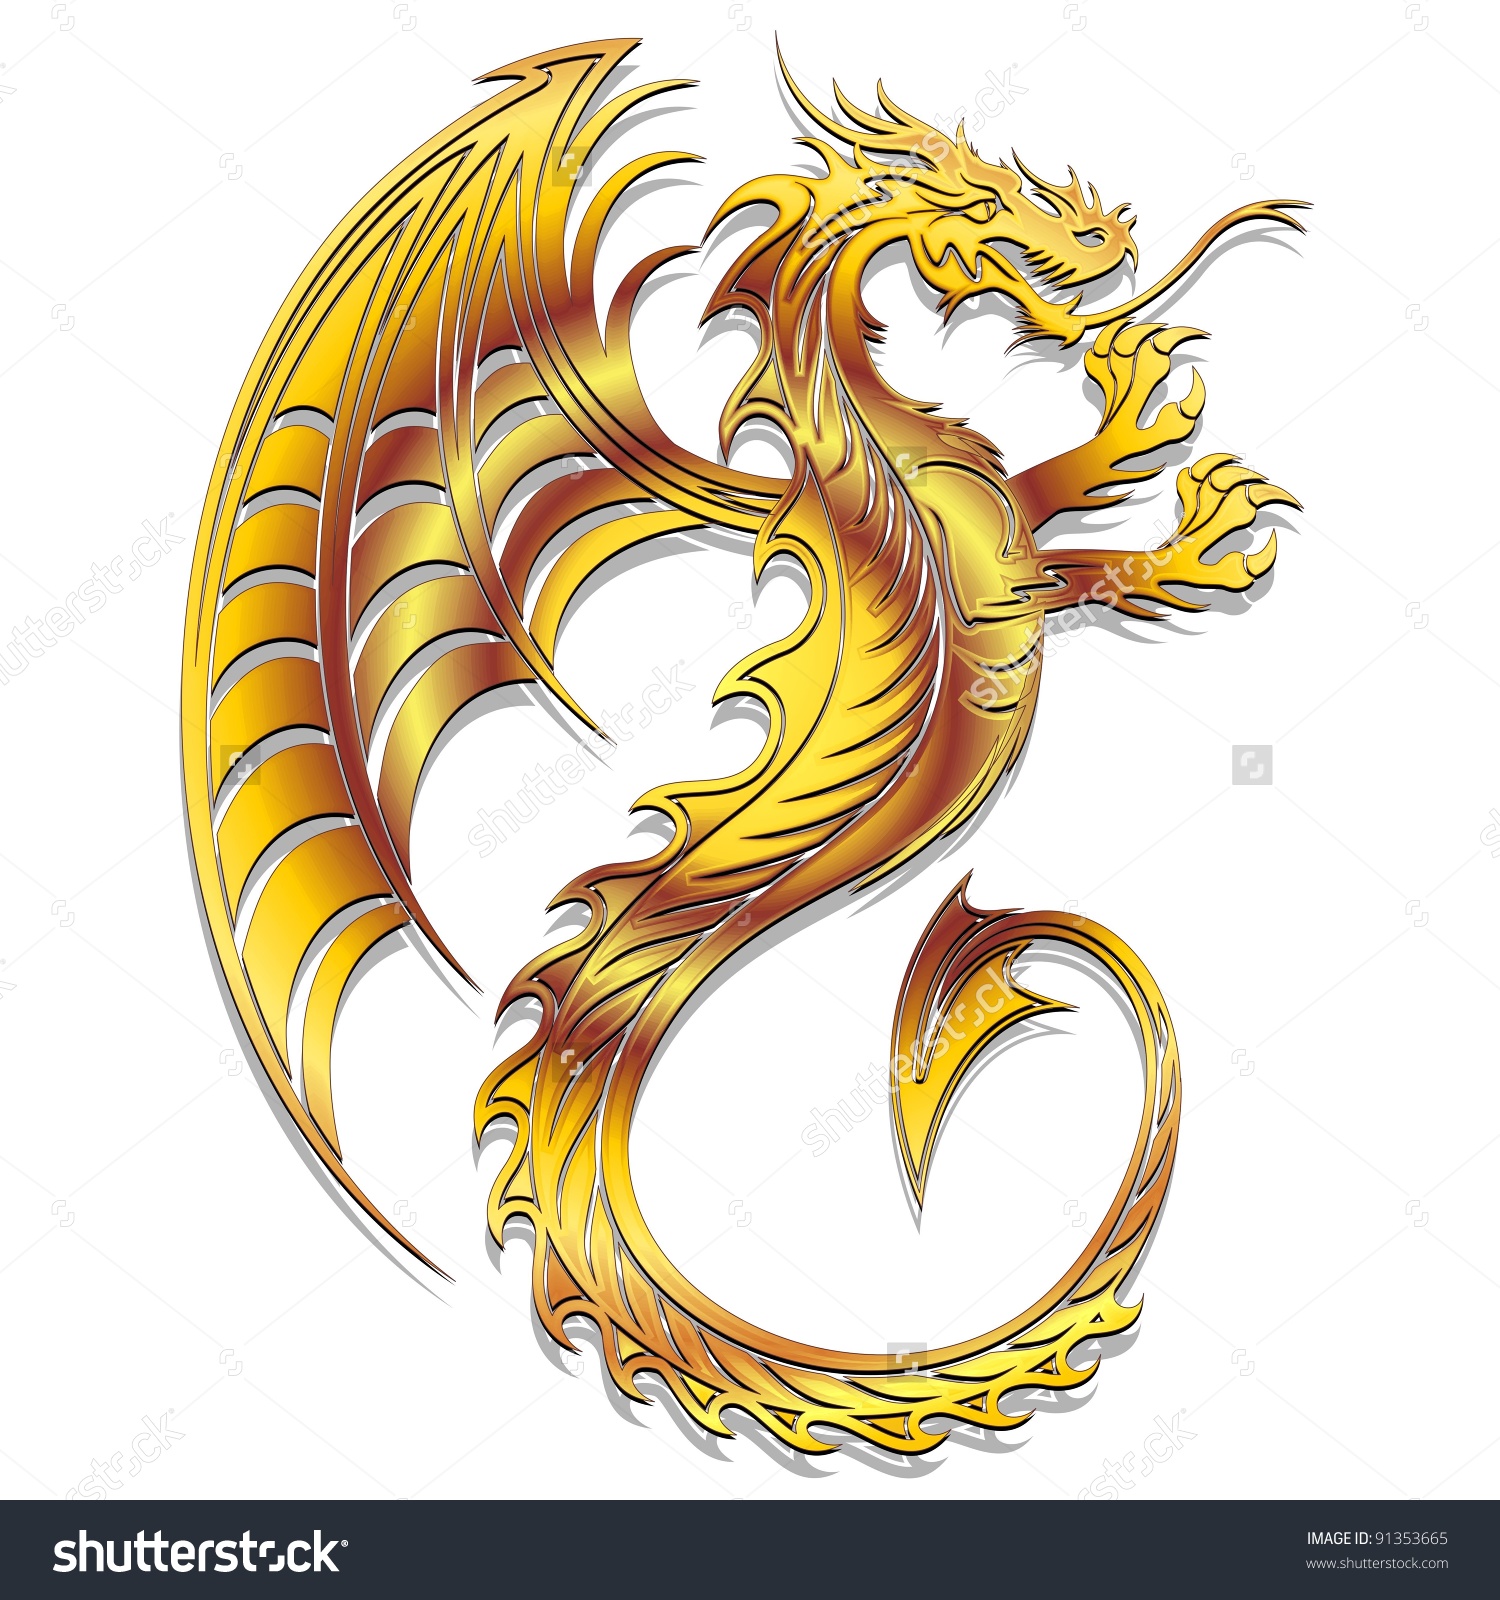 Golden Dragon Symbol 2012 Stock Illustration 91353665.